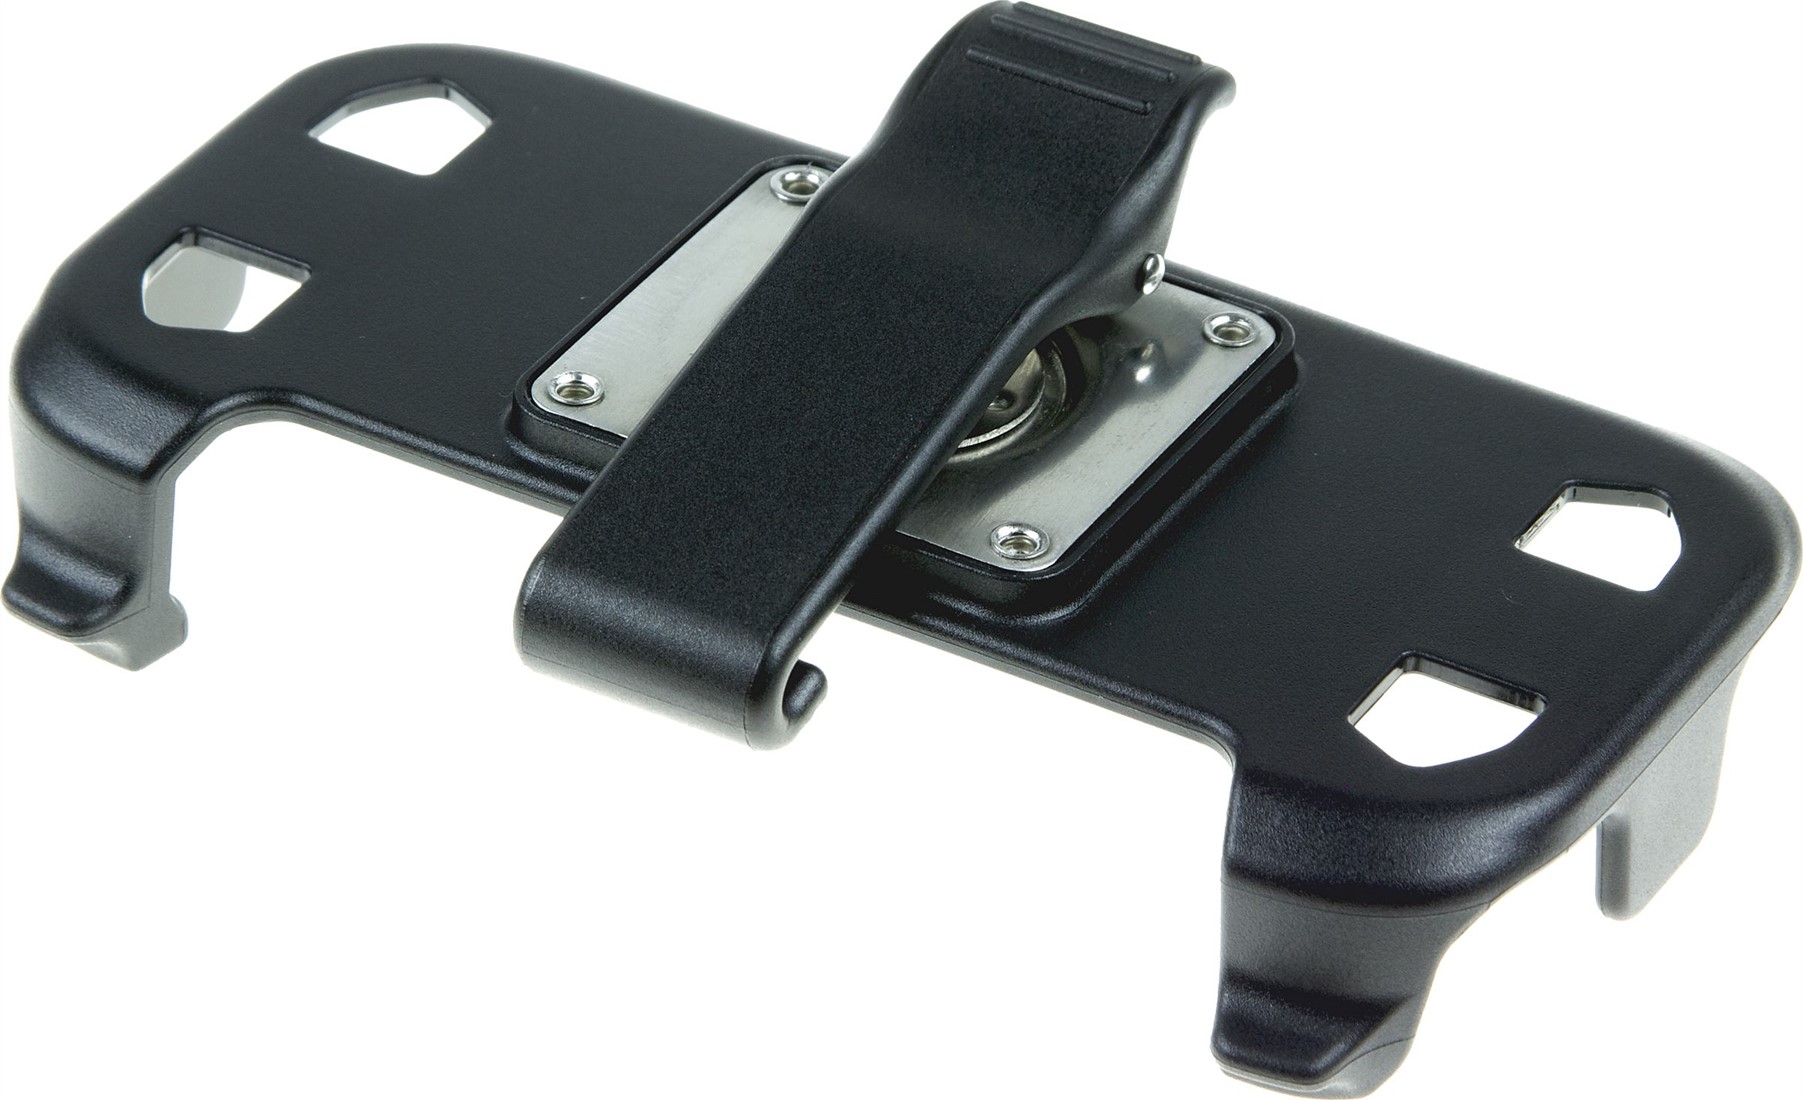 Rigid holster with belt clip for Zebra EC30